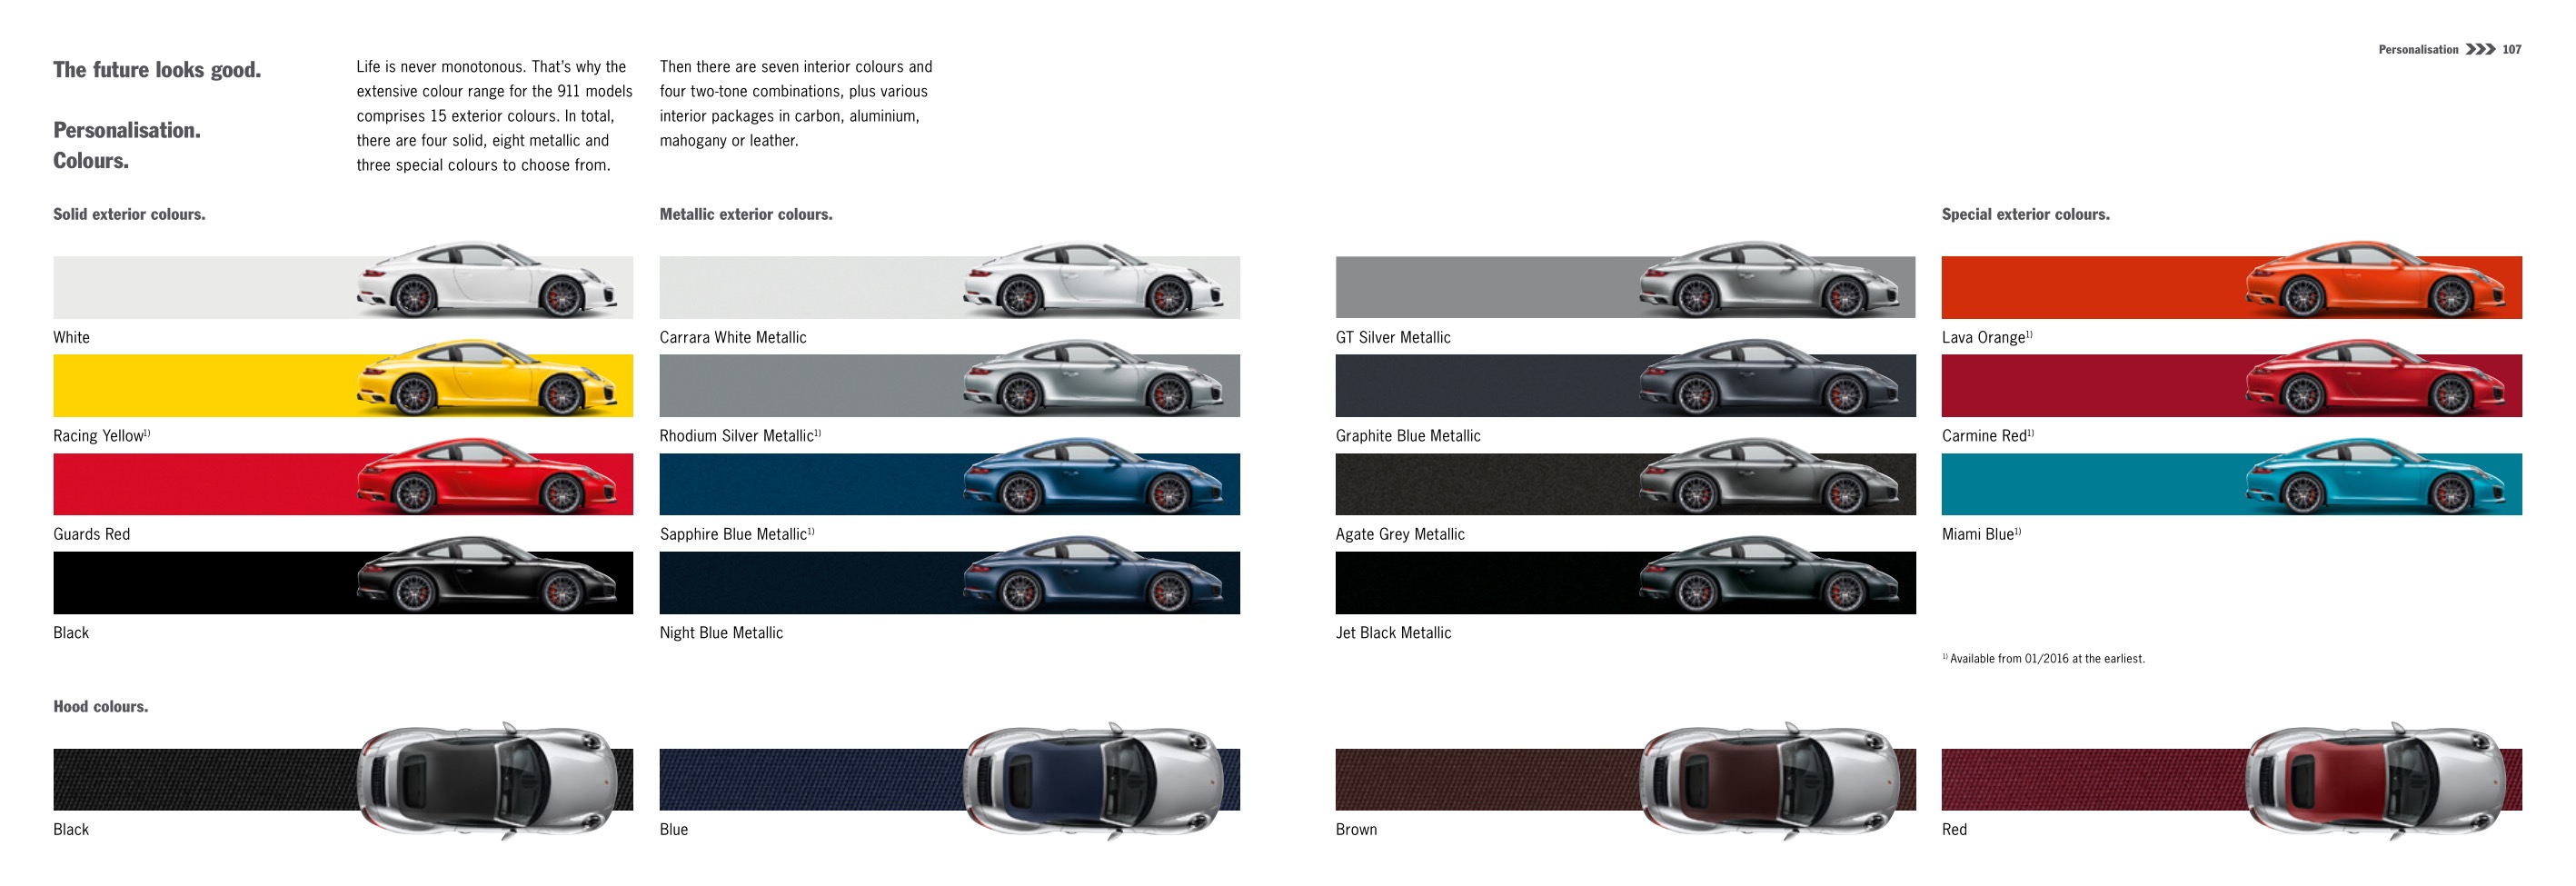 2016 Porsche 911 Brochure Page 9